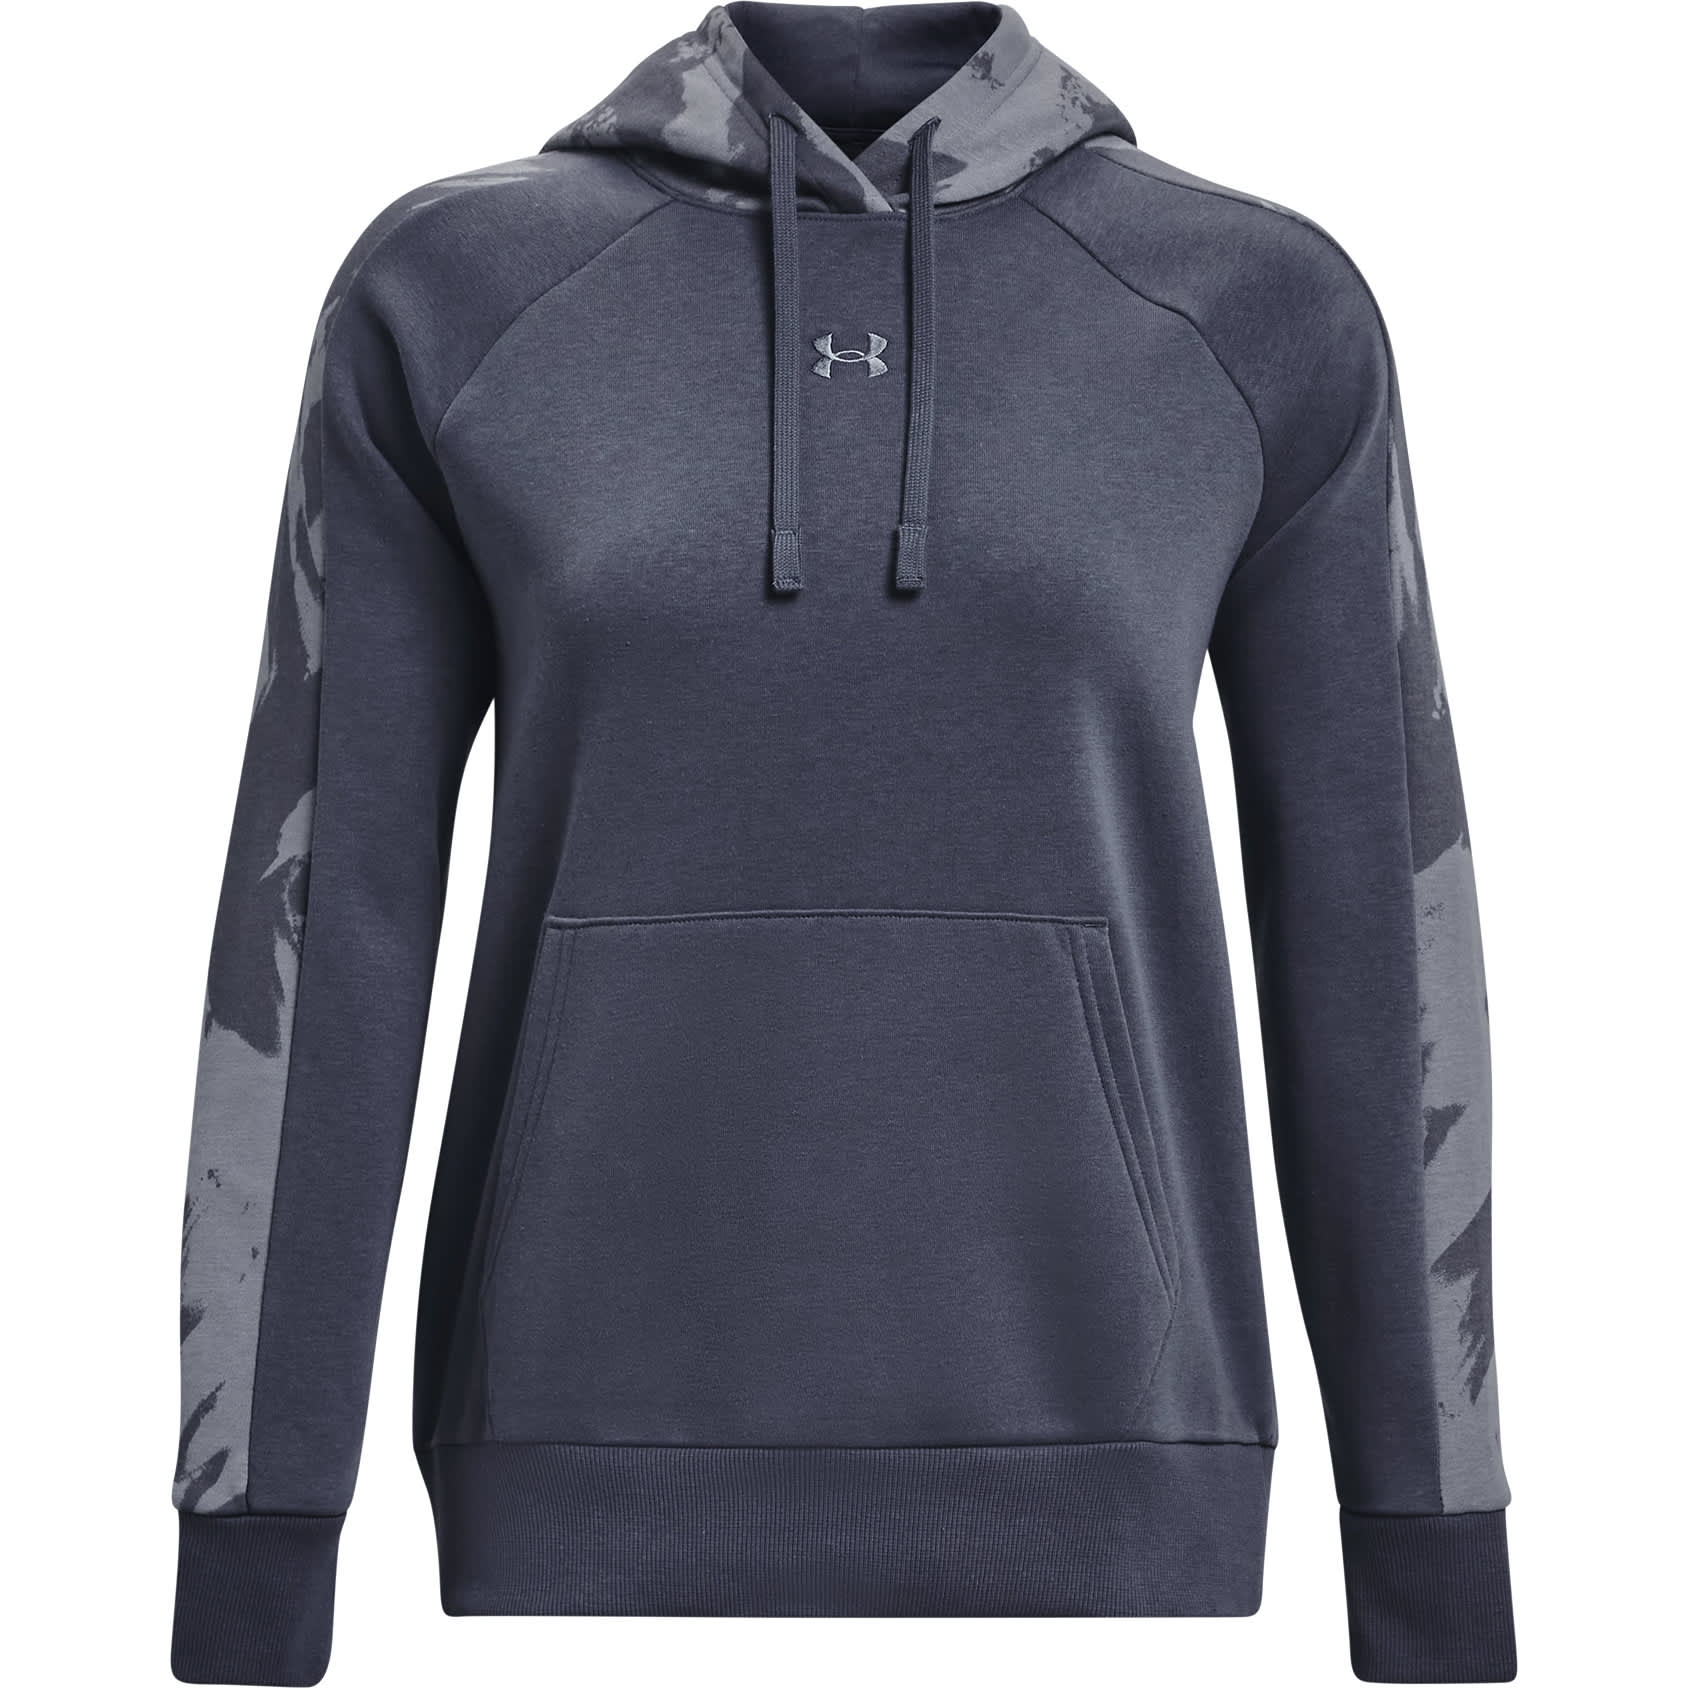 Under Armor Hoodie Women XL Gray Sweatshirt Sweater Storm Cold Gear Loose  Fit *